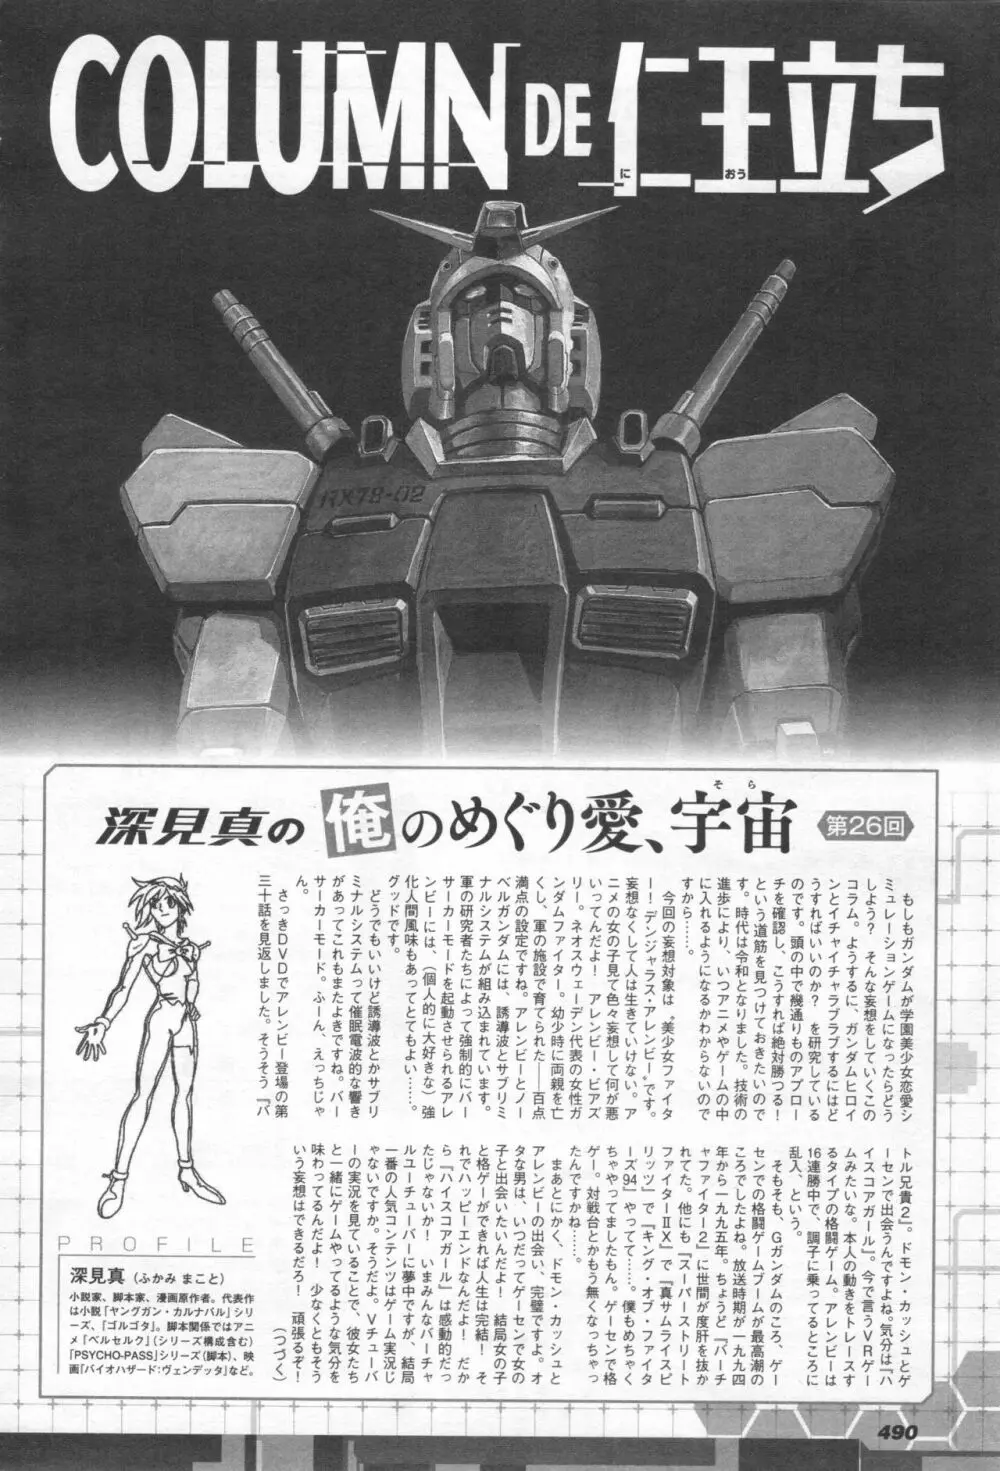 Gundam Ace – October 2019 493ページ